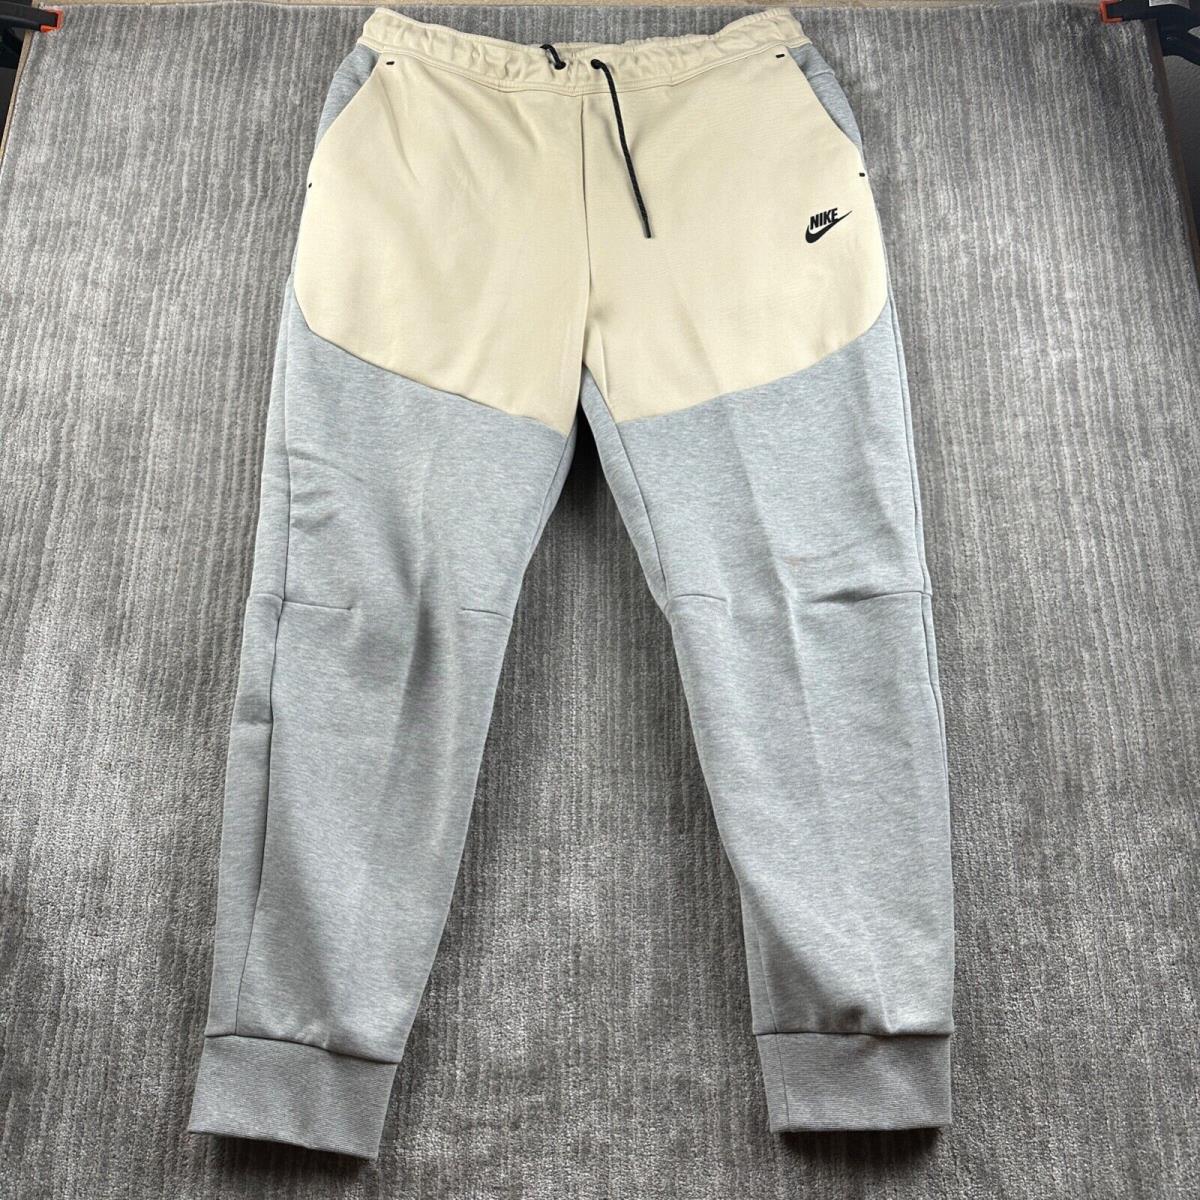 Nike Tech Fleece Pants Mens 2XL Sweatpants Joggers Gray Beige Tan CU4495-064